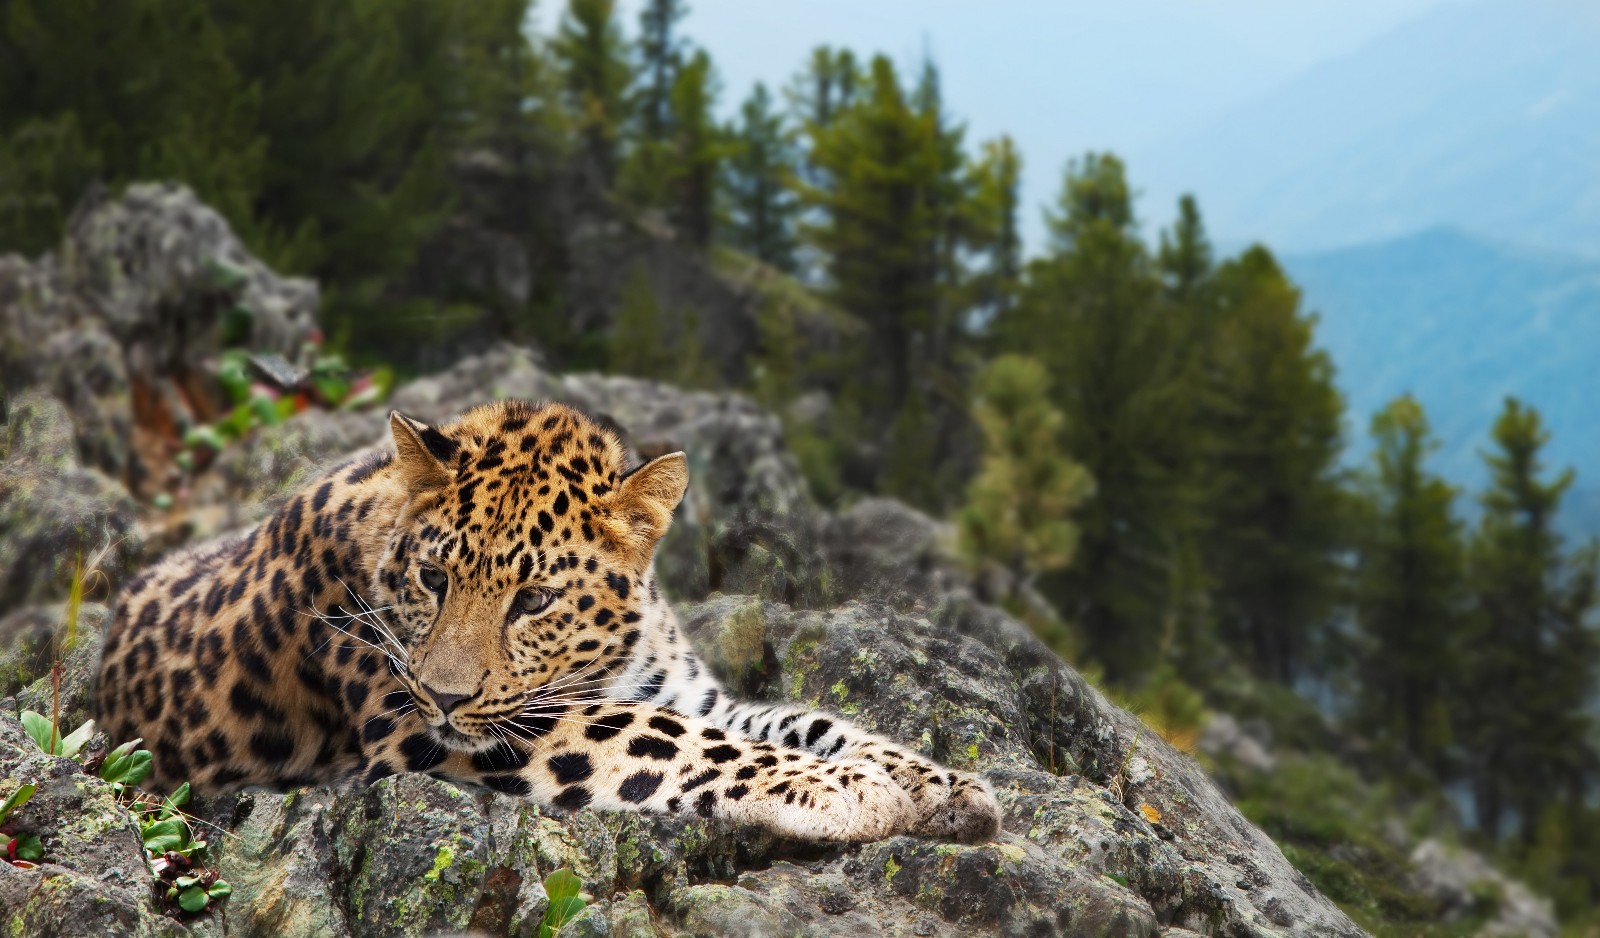 Sharing Panama with Wild Jaguars